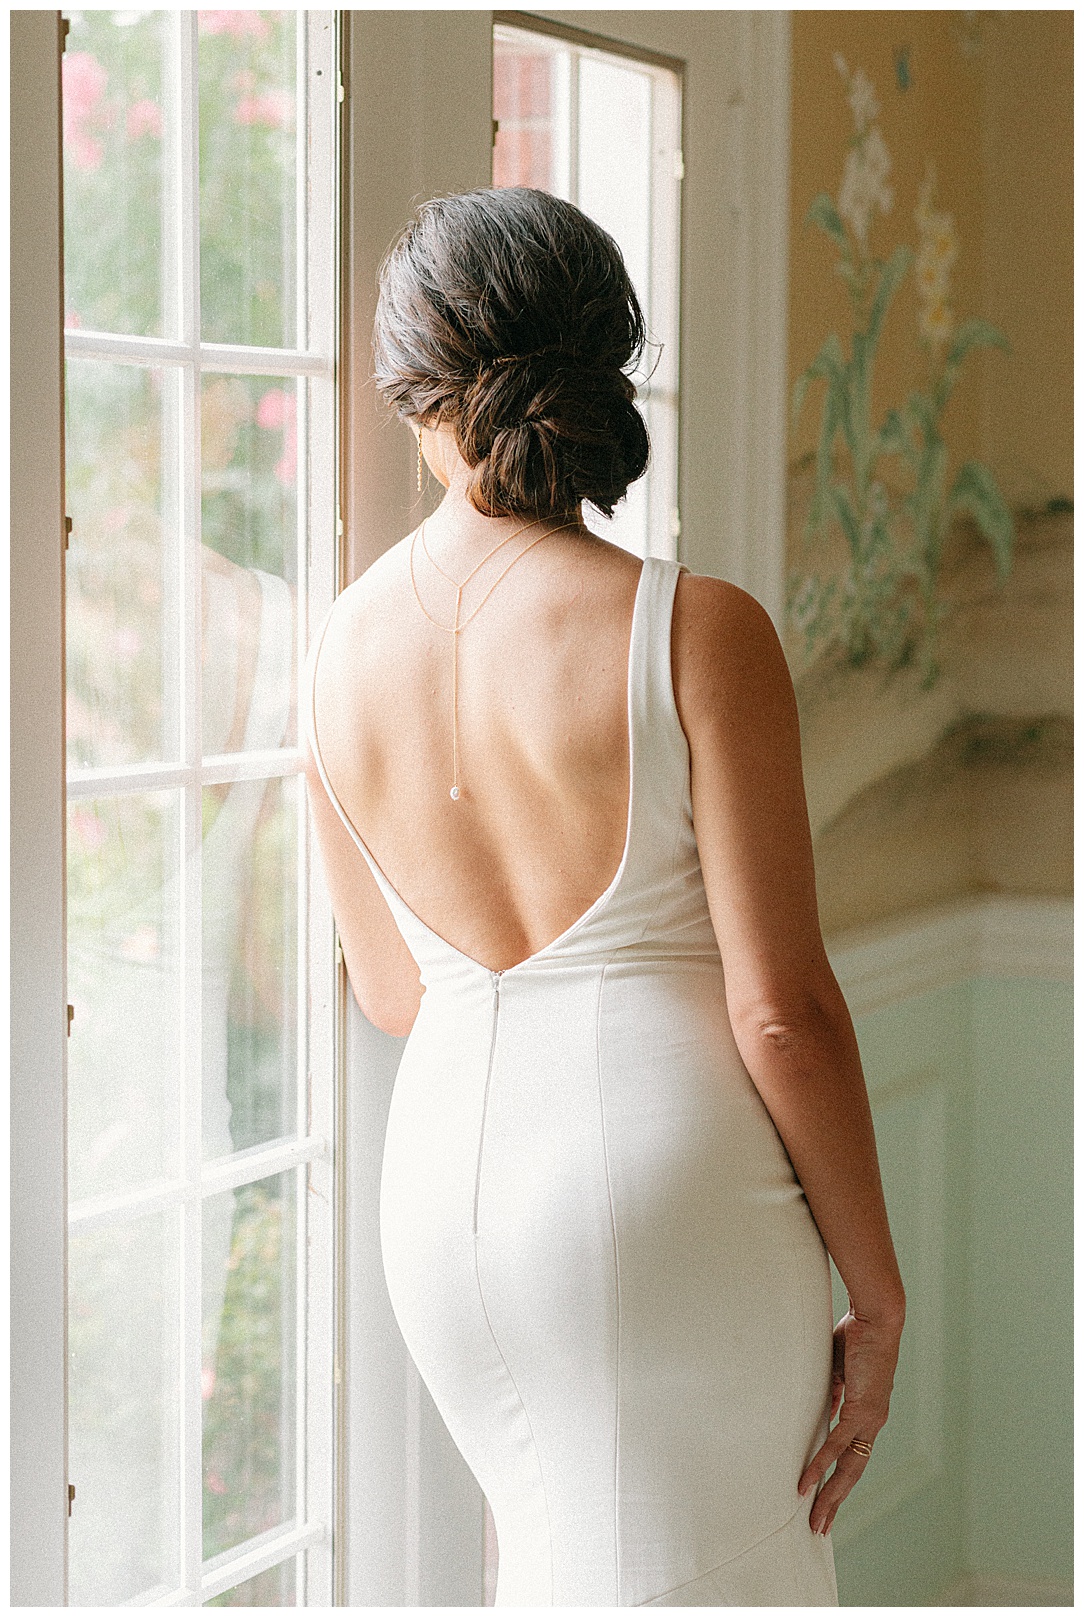 window portrait of bride from behind